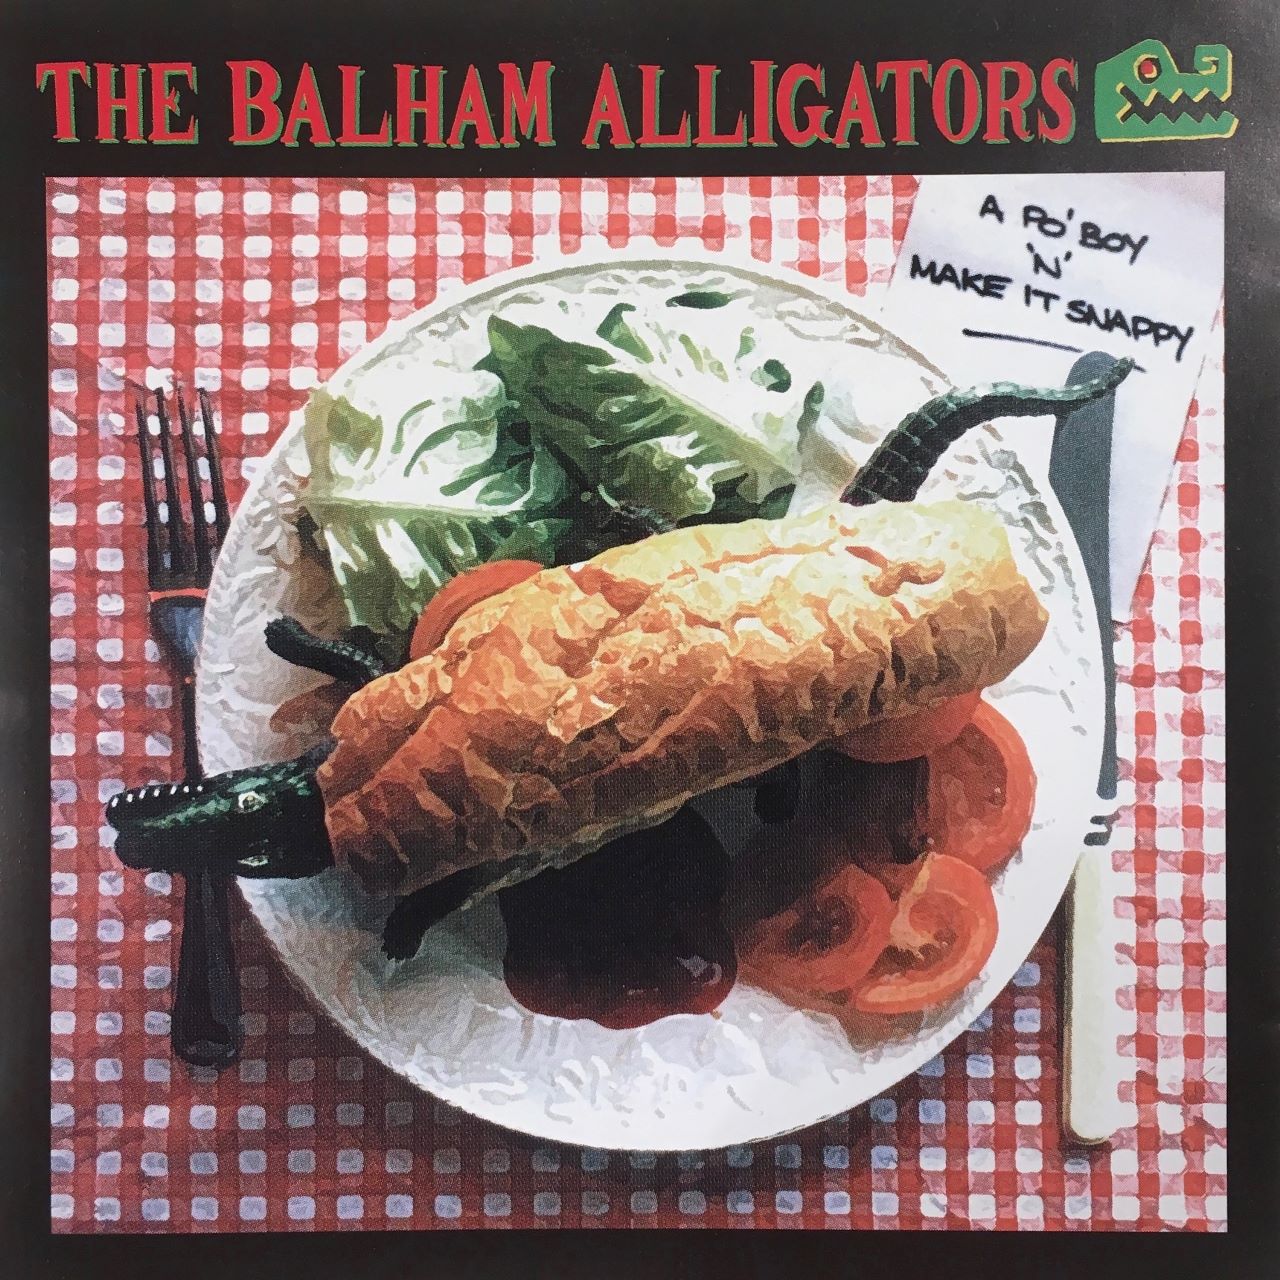 Balham Alligators - A Pò Boy, 'n' Make It Happy cover album